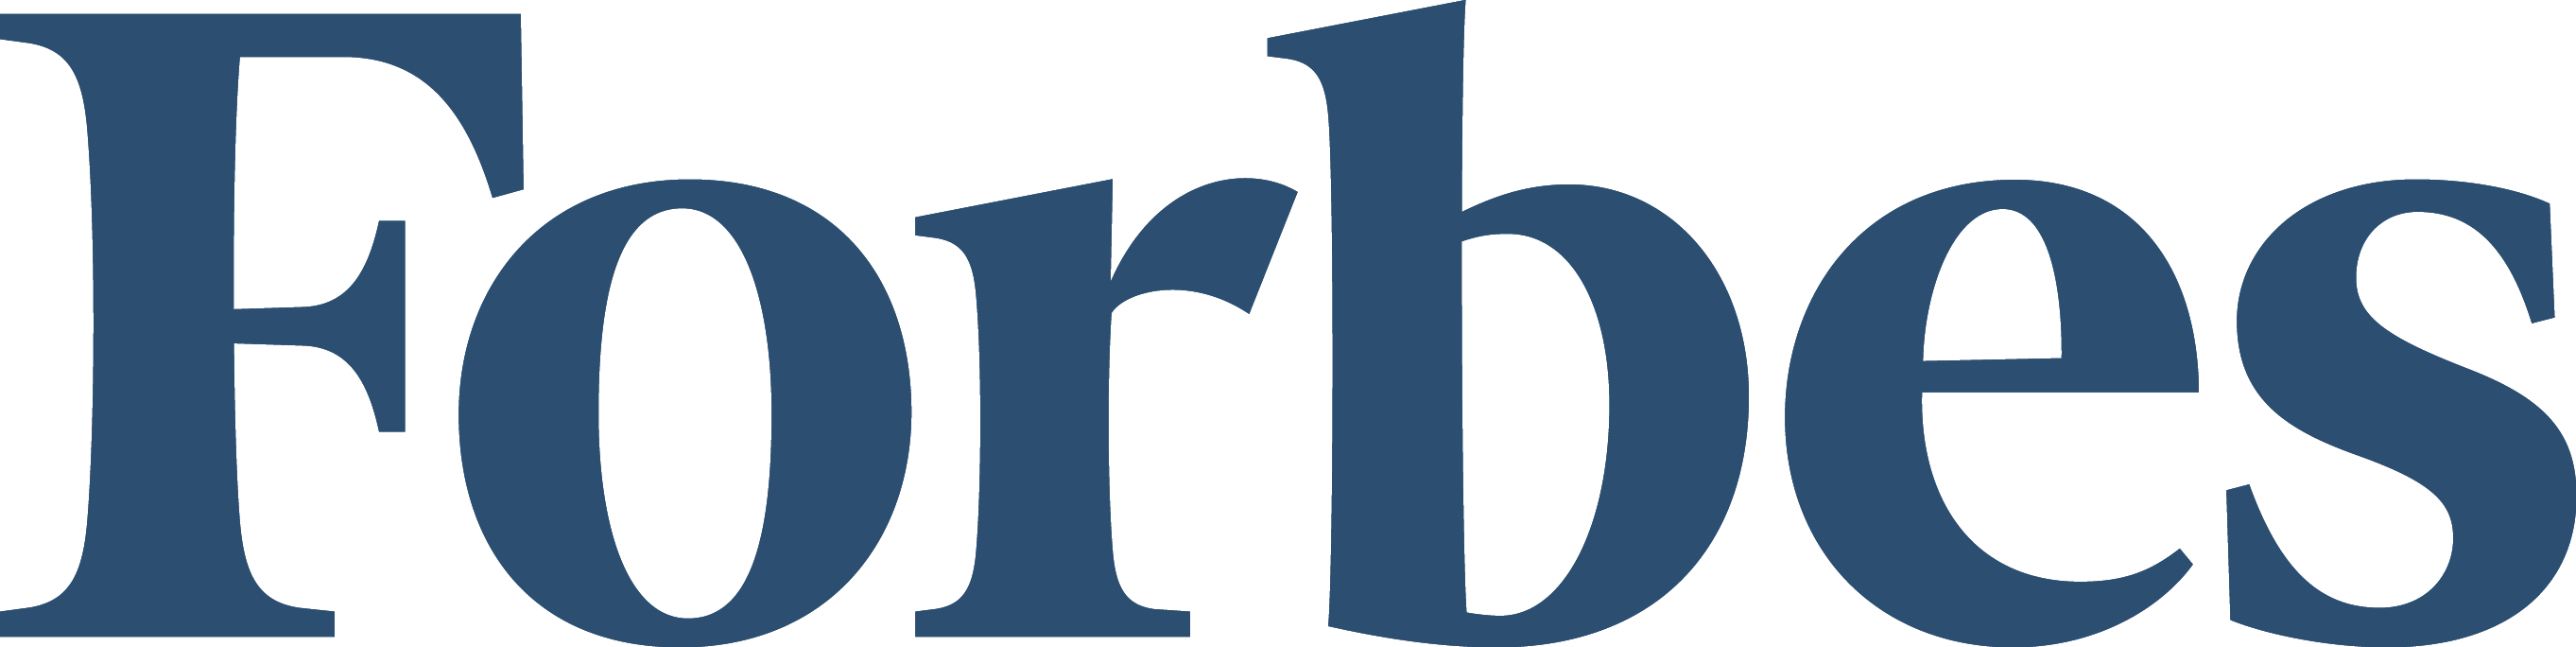 Forbes Logo Blueon Transparent PNG